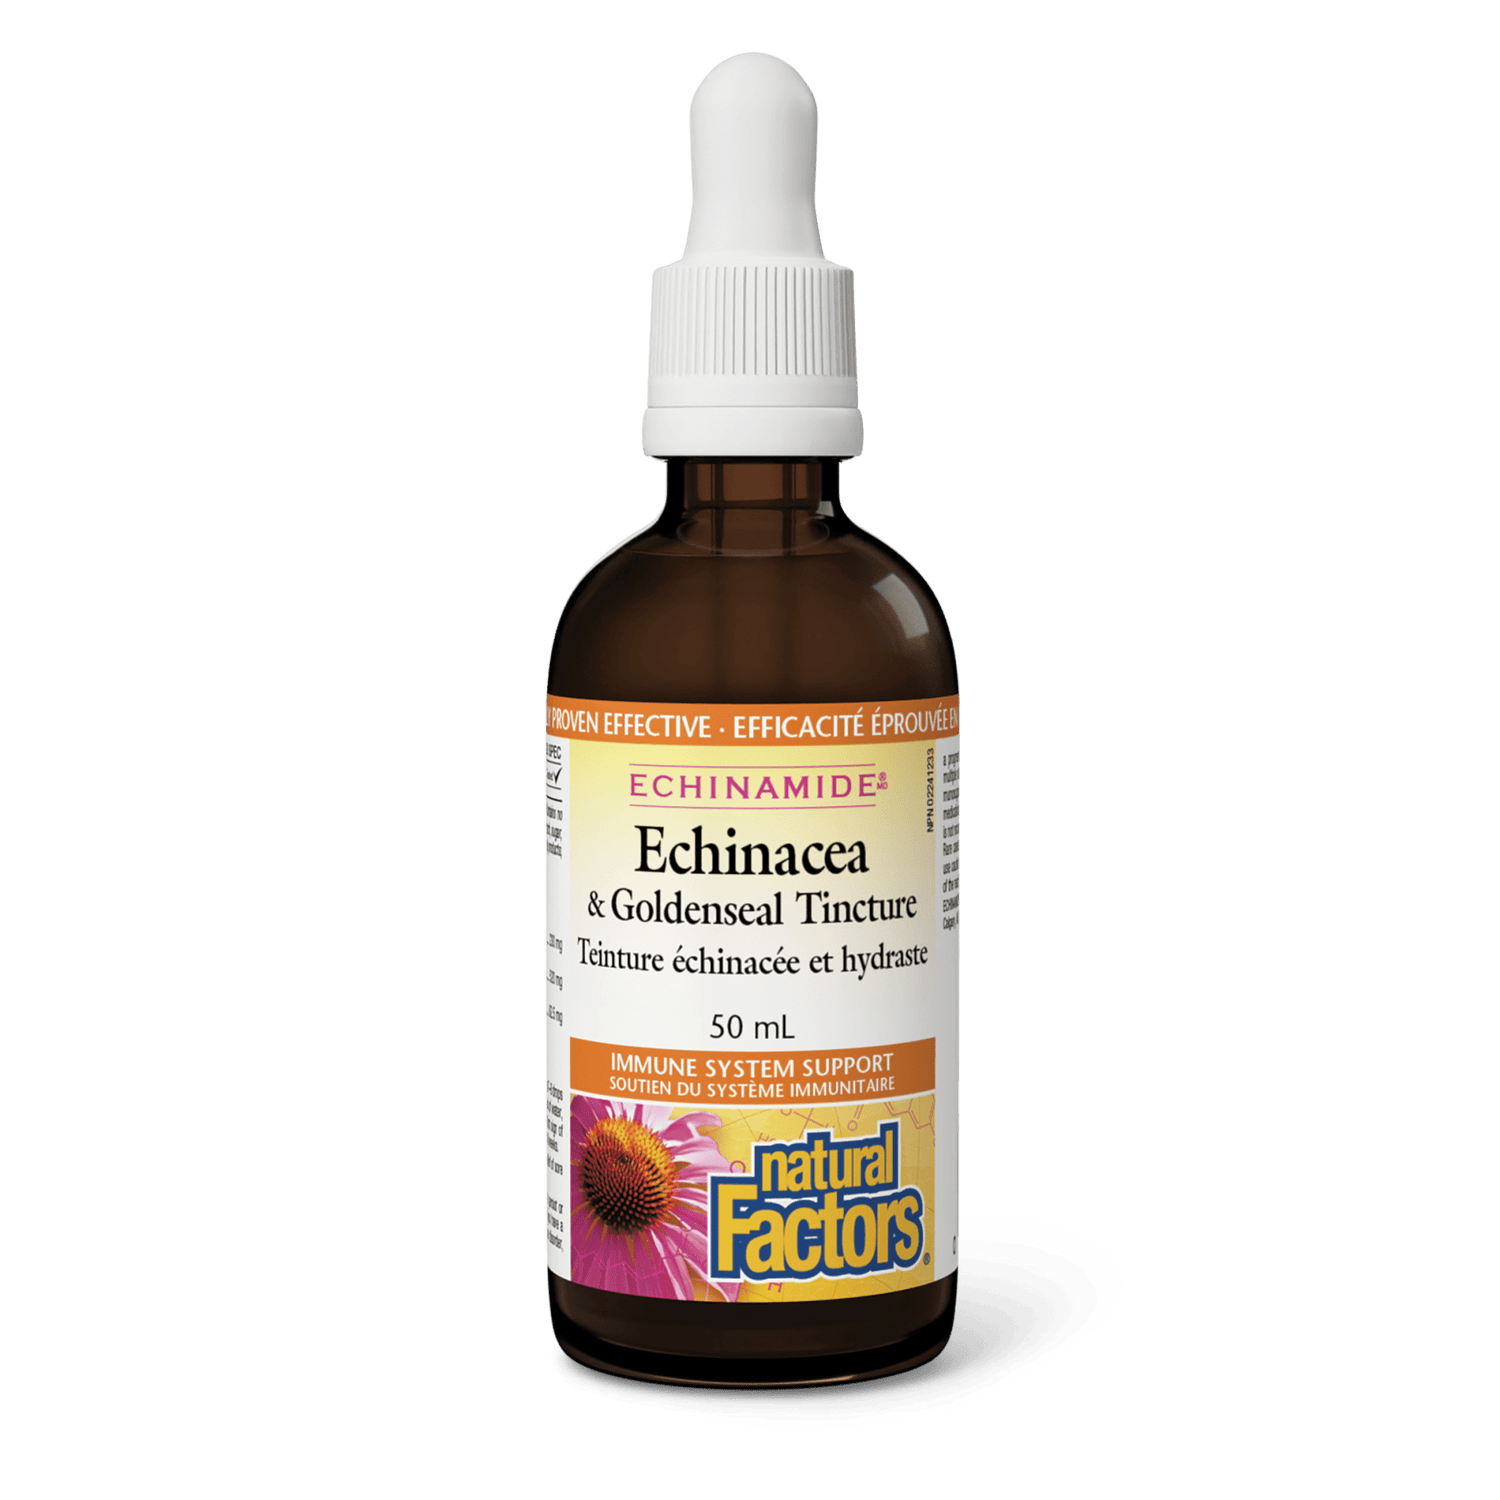 Echinacea & Goldenseal Tincture, ECHINAMIDE, Natural Factors|v|image|4730